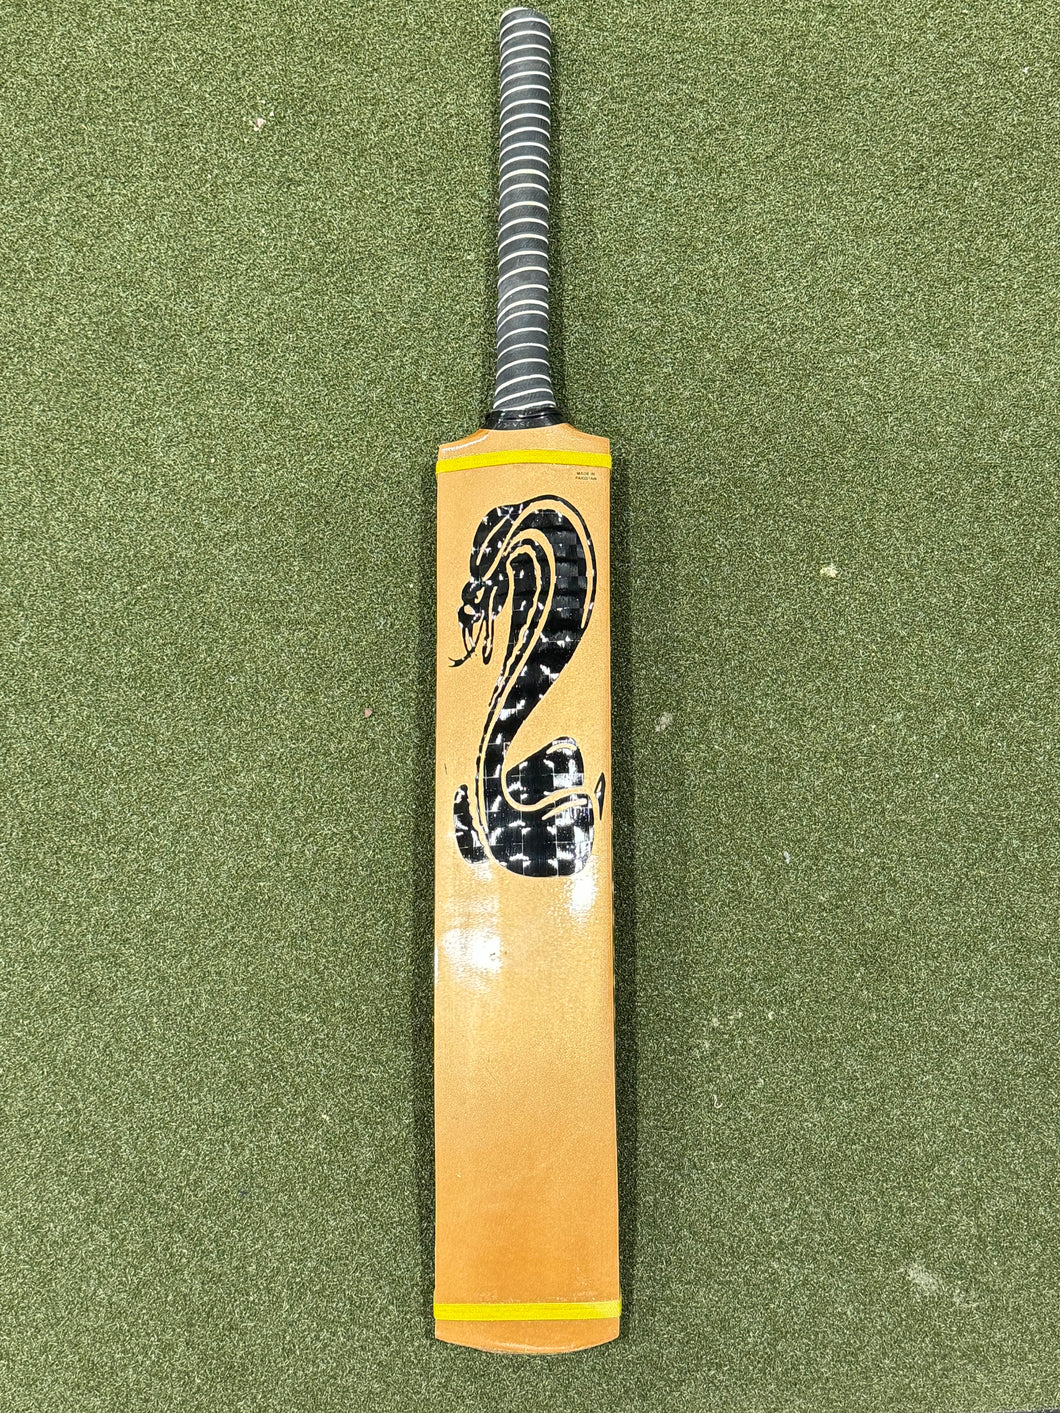 Barna Tape ball / soft ball Cricket bat